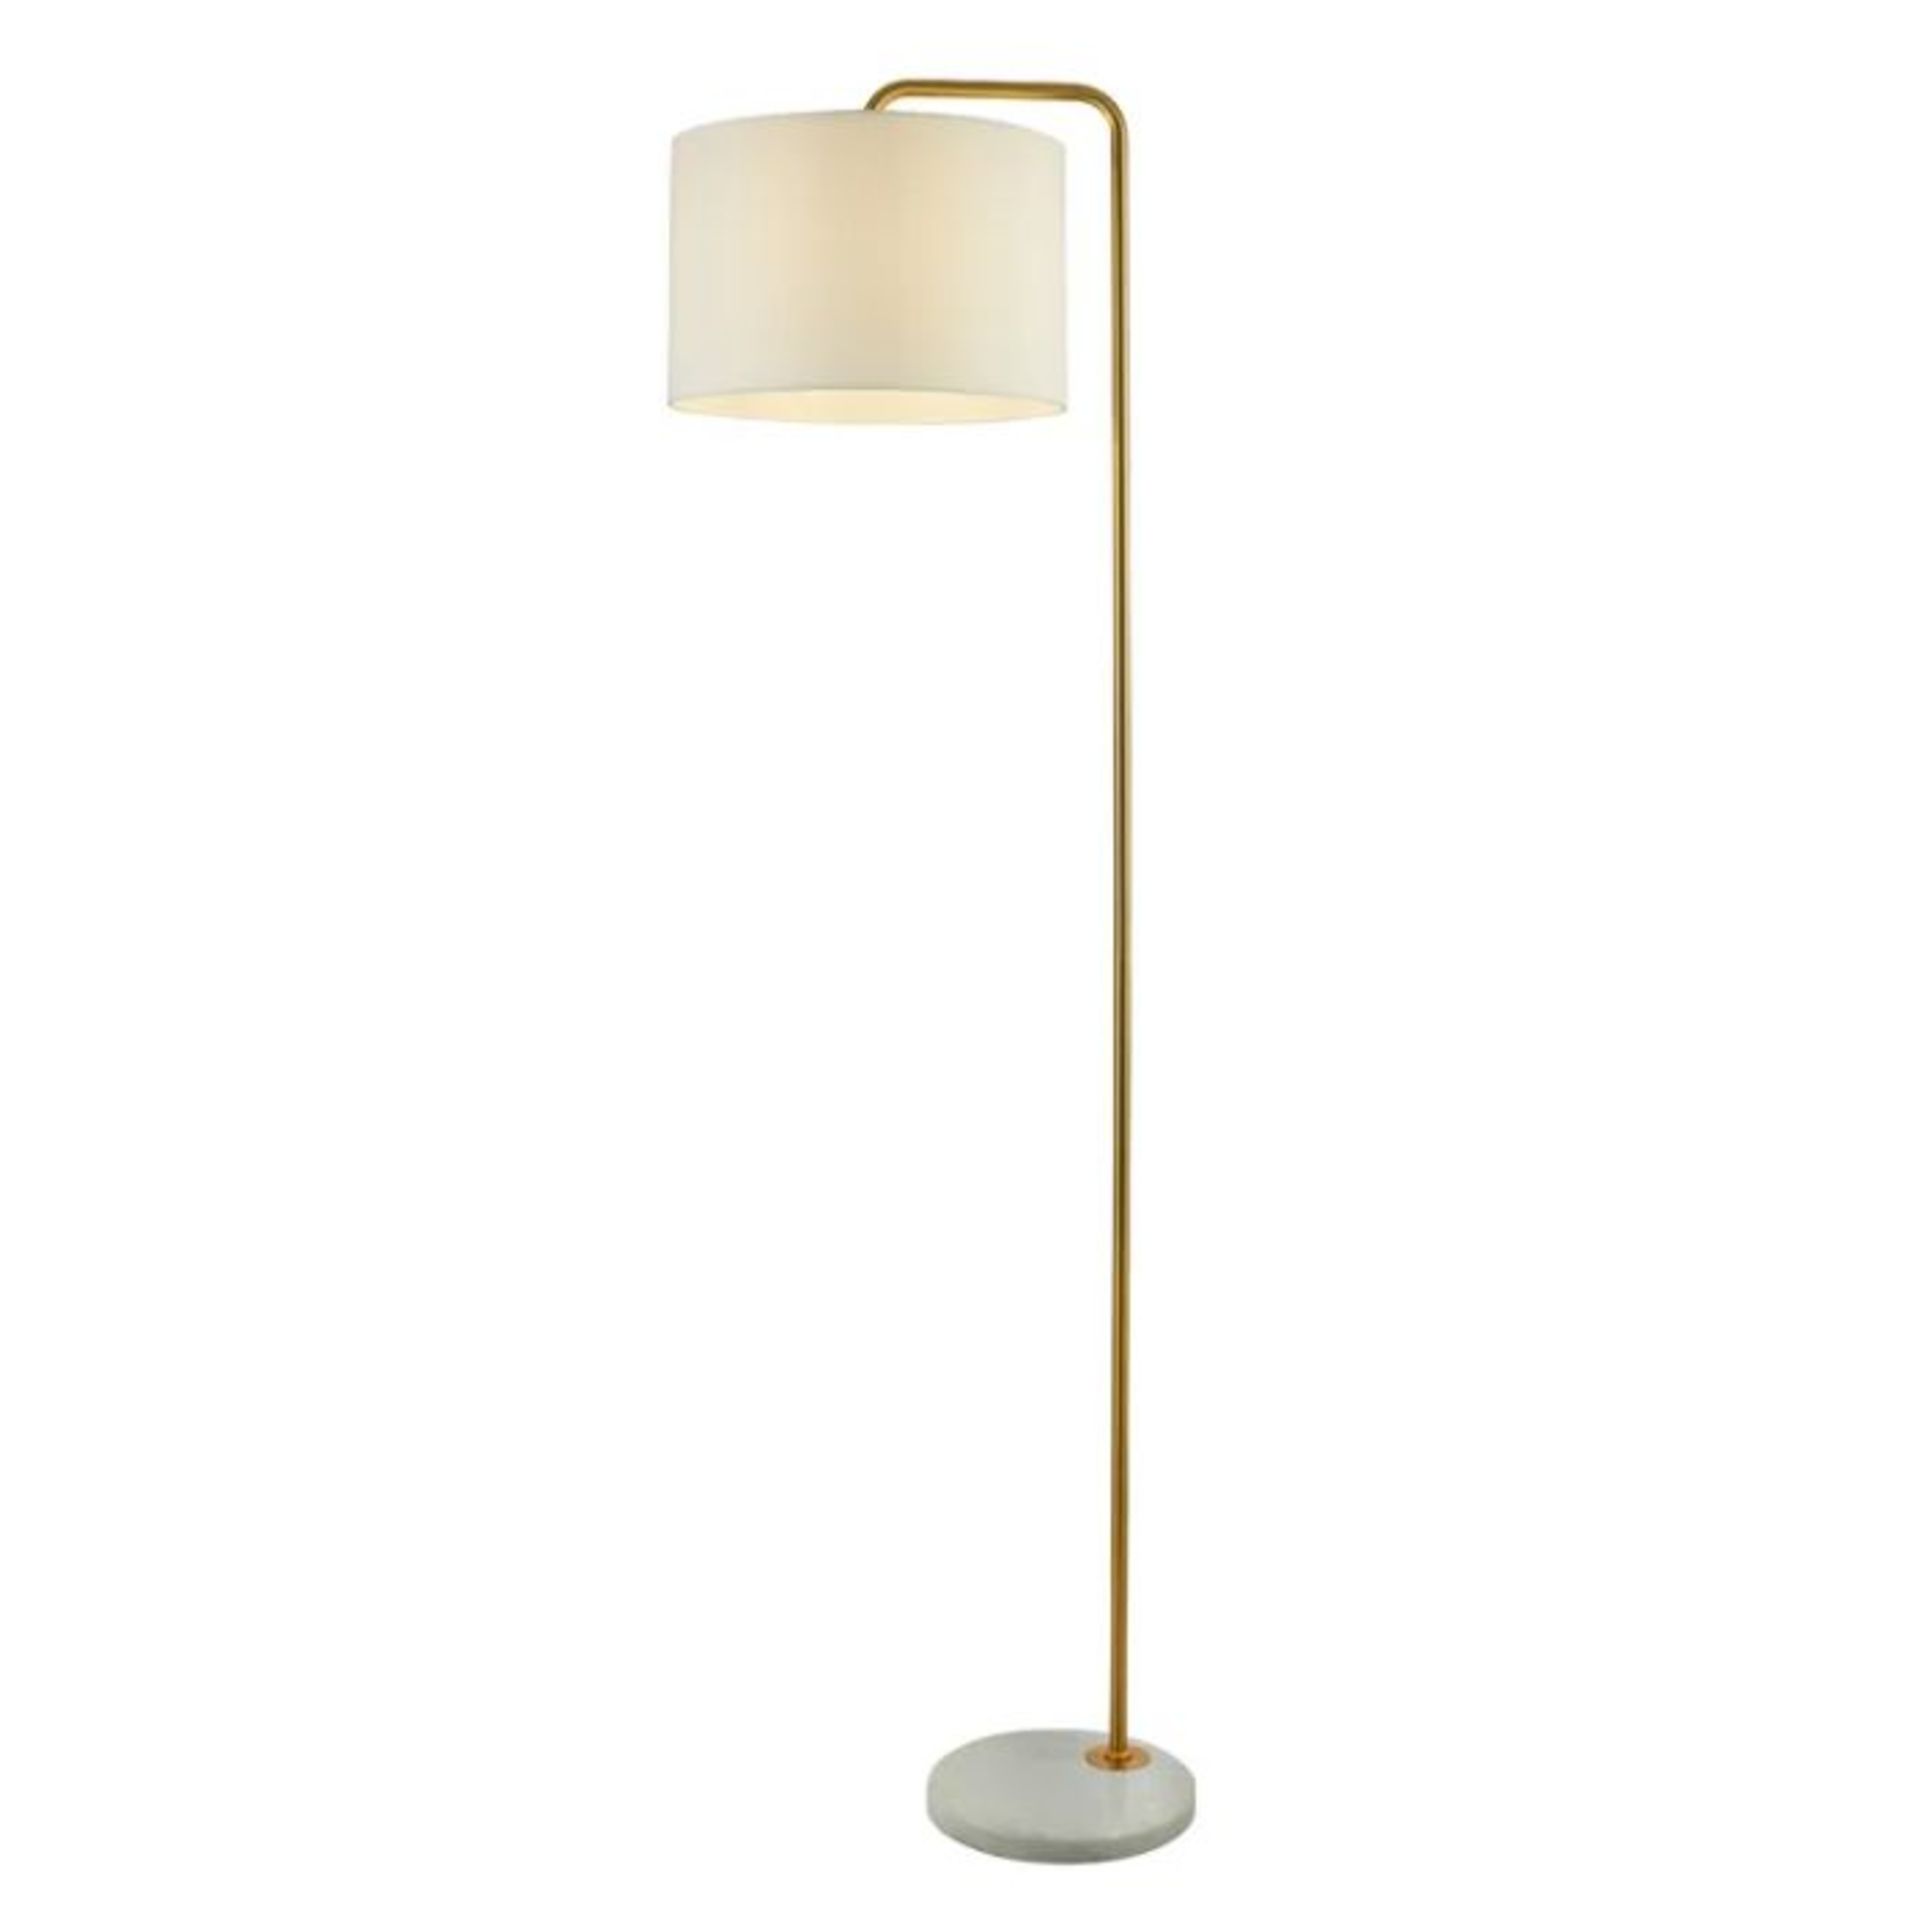 Mistana, 155cm Reading Floor Lamp (ANTIQUE GOLD & MARBLE BASE) (CREAM SHADE DAMAGED) - RRP £119.